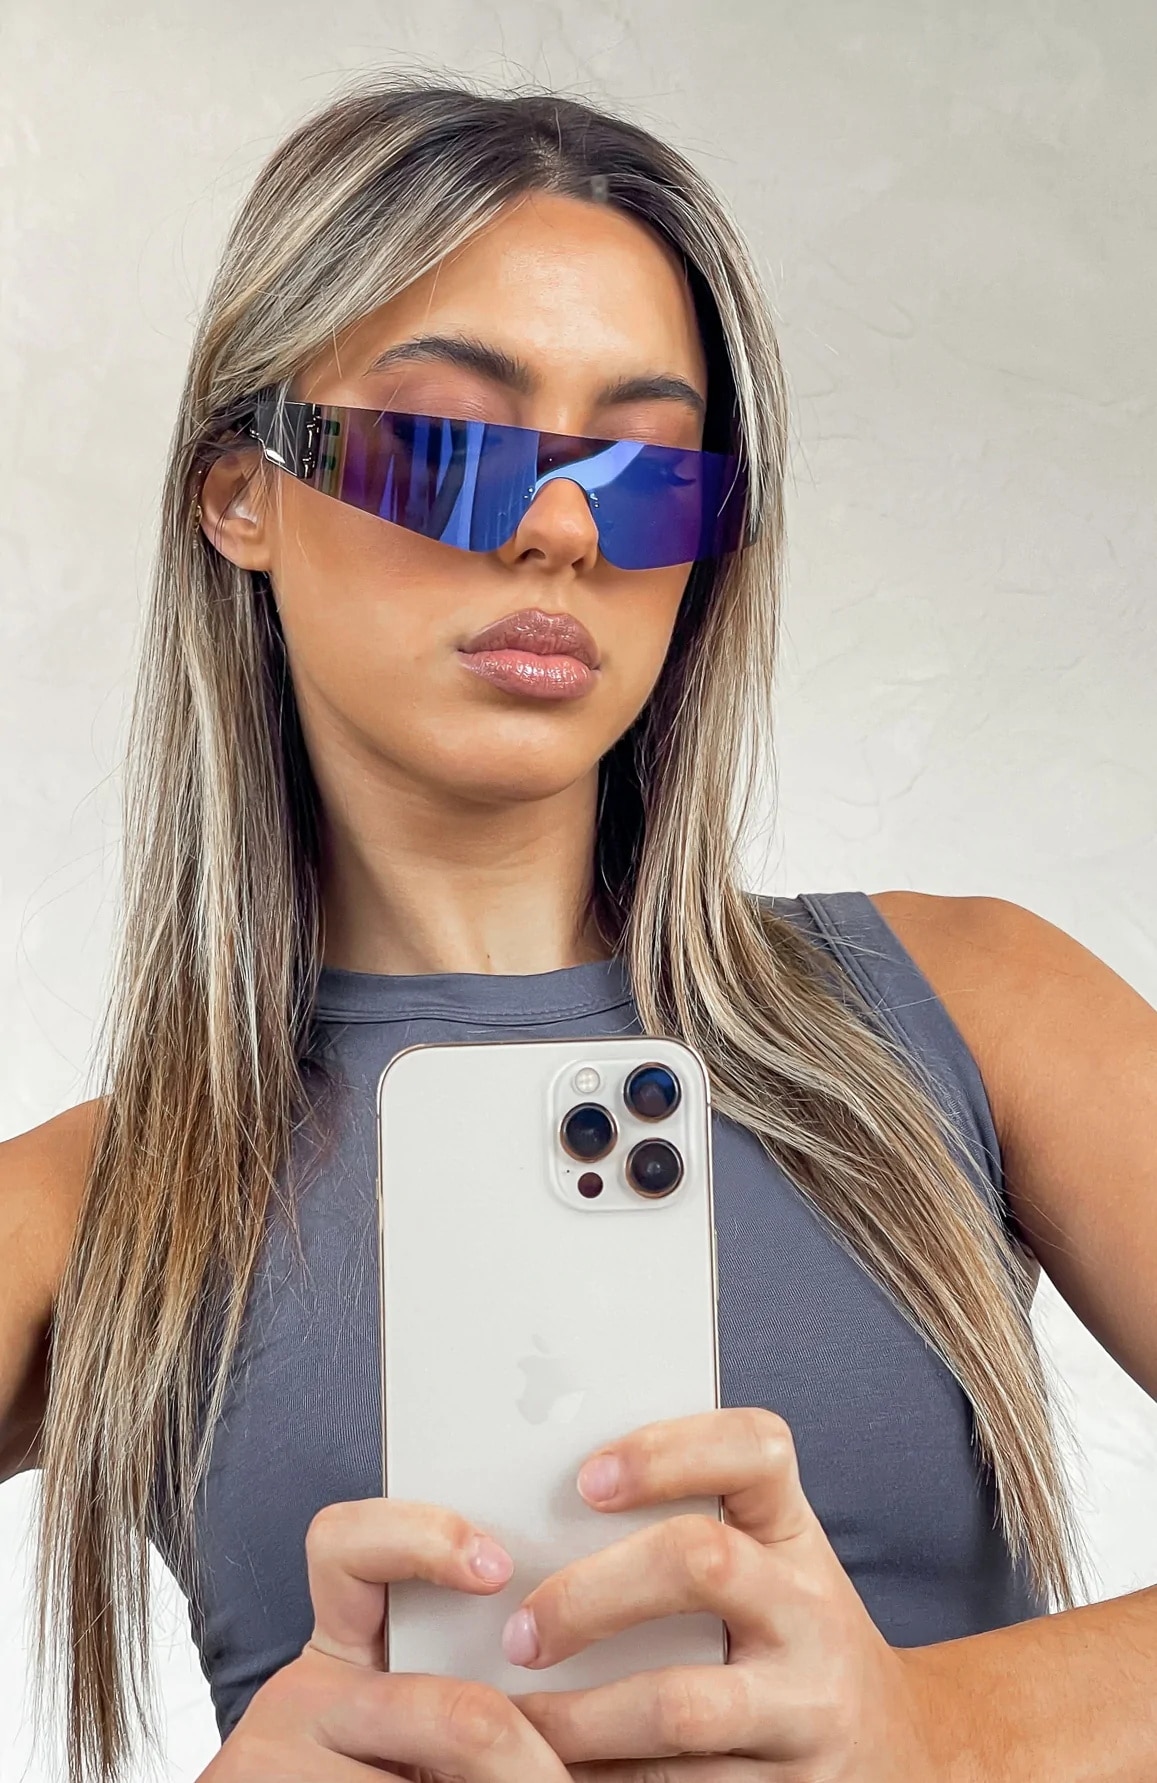 Y2k Punk Wrap Around Sunglasses For Women Men Futuristic Mirrored